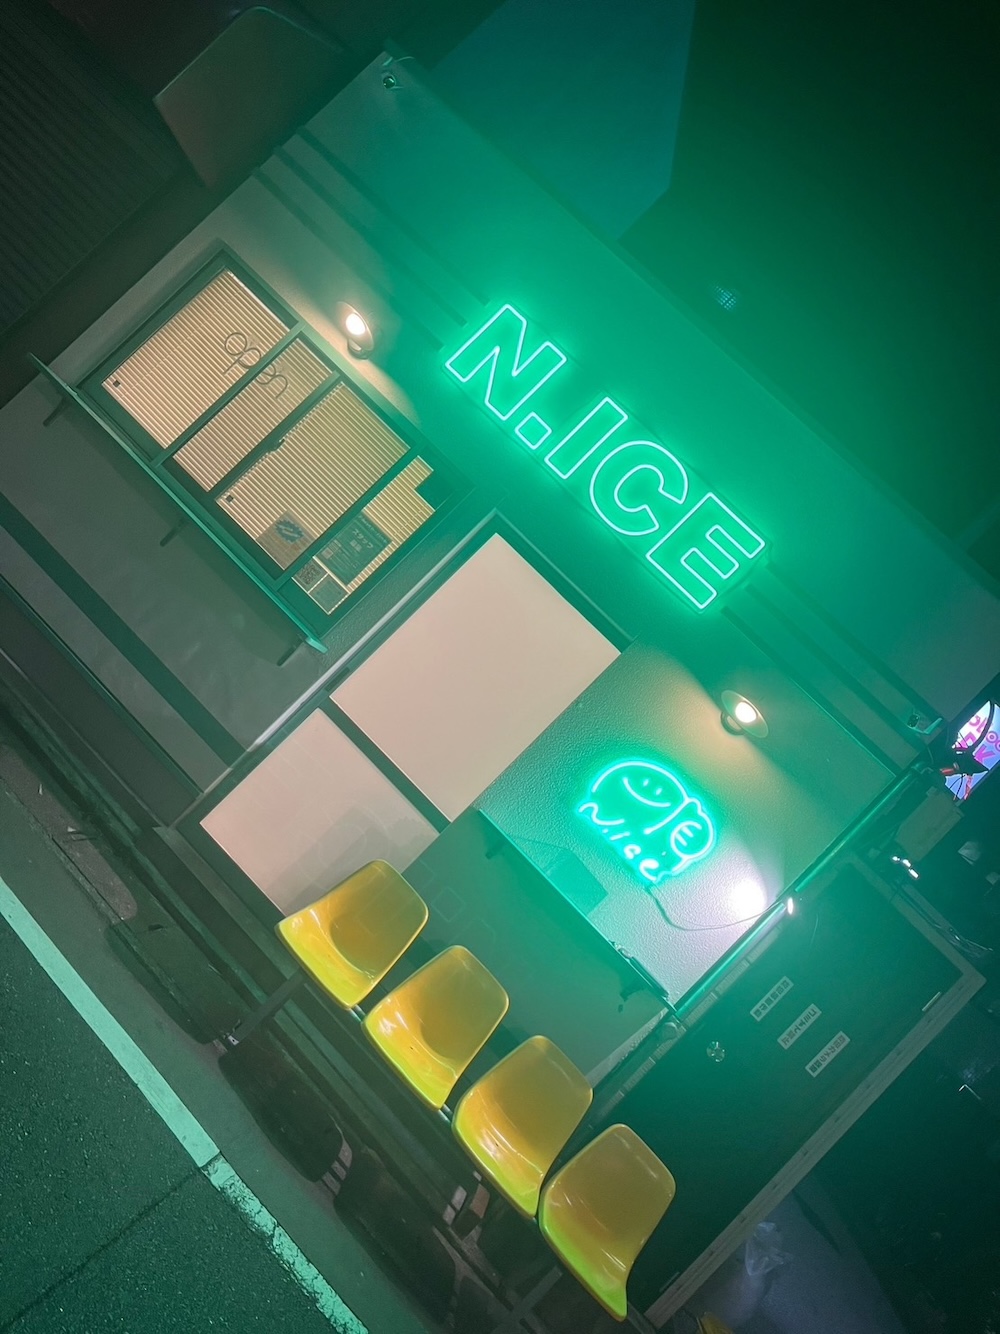 「Niceな夜アイス＆クロッフル専門店」外観イメージ